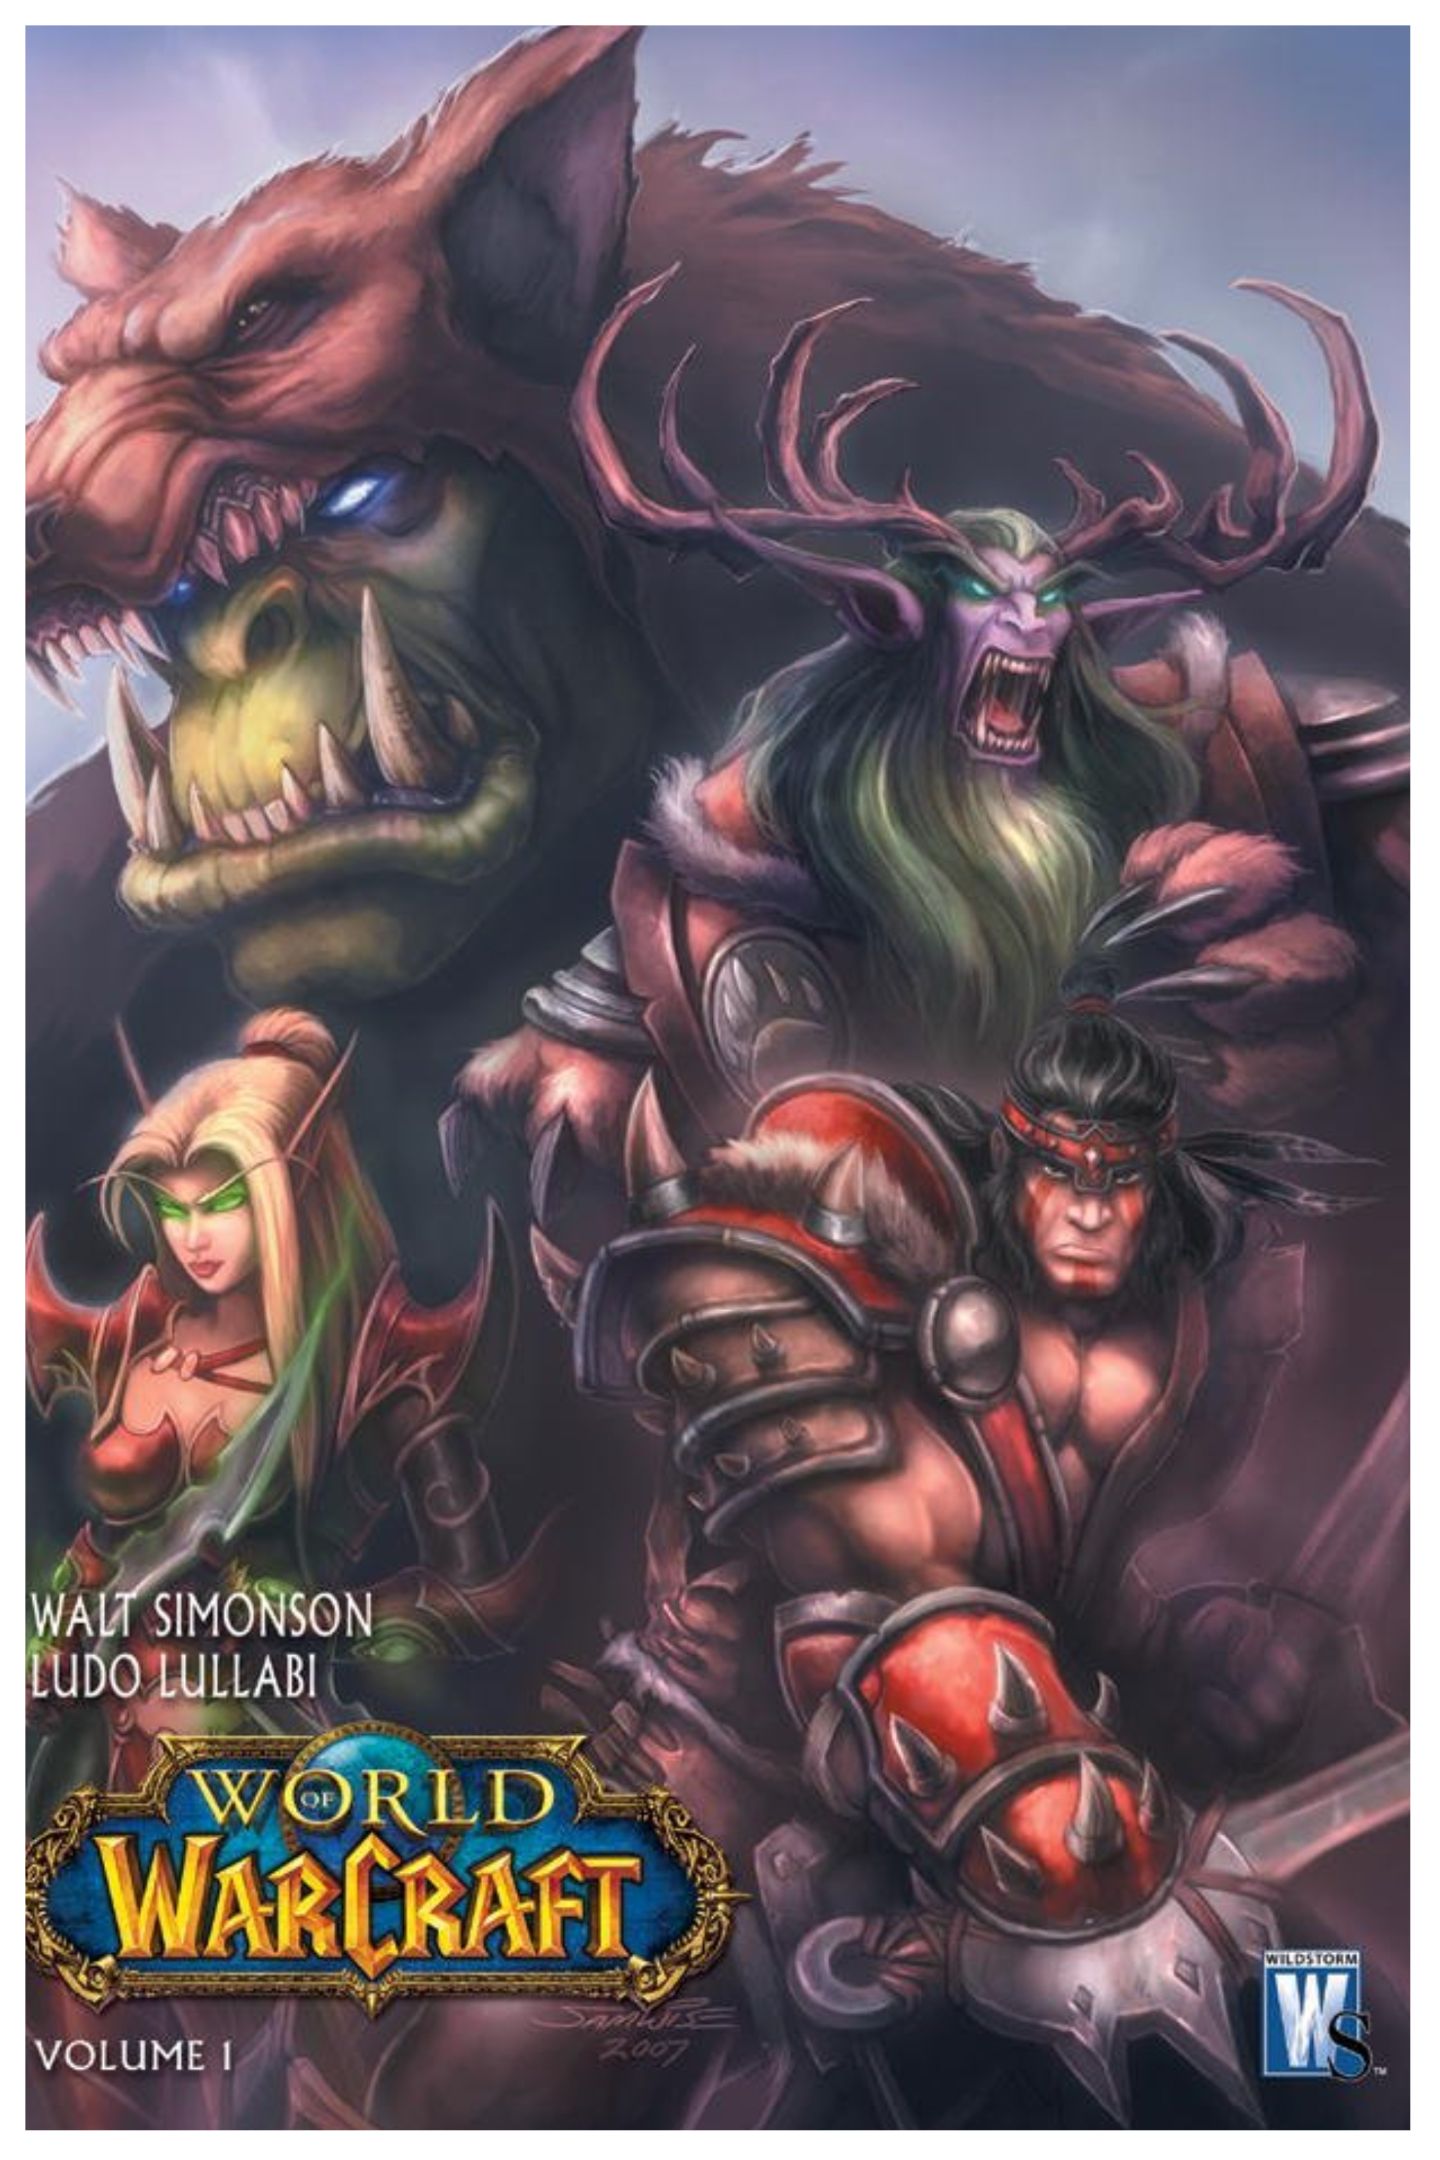 World of Warcraft Vol. 1 comic